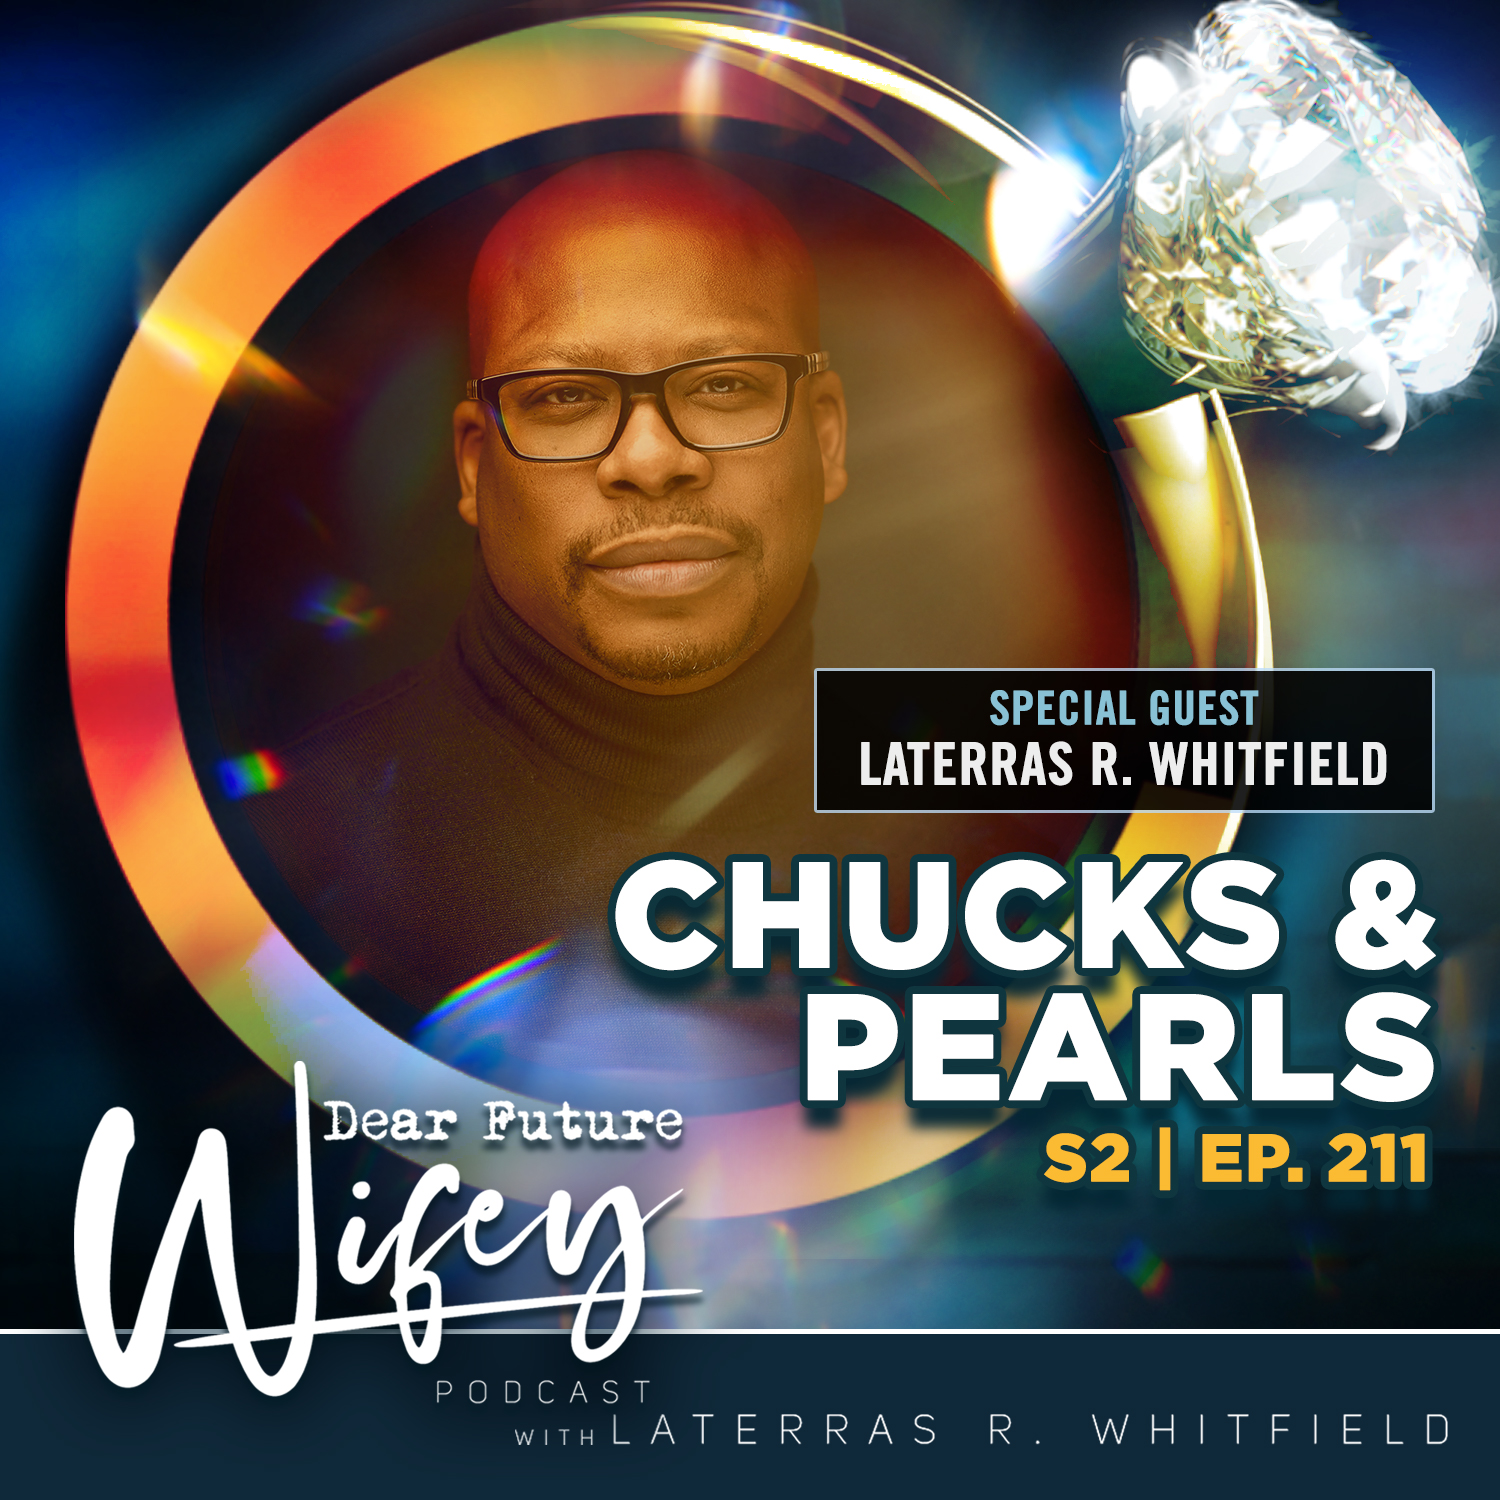 Chucks & Pearls (Guest: Laterras R. Whitfield)